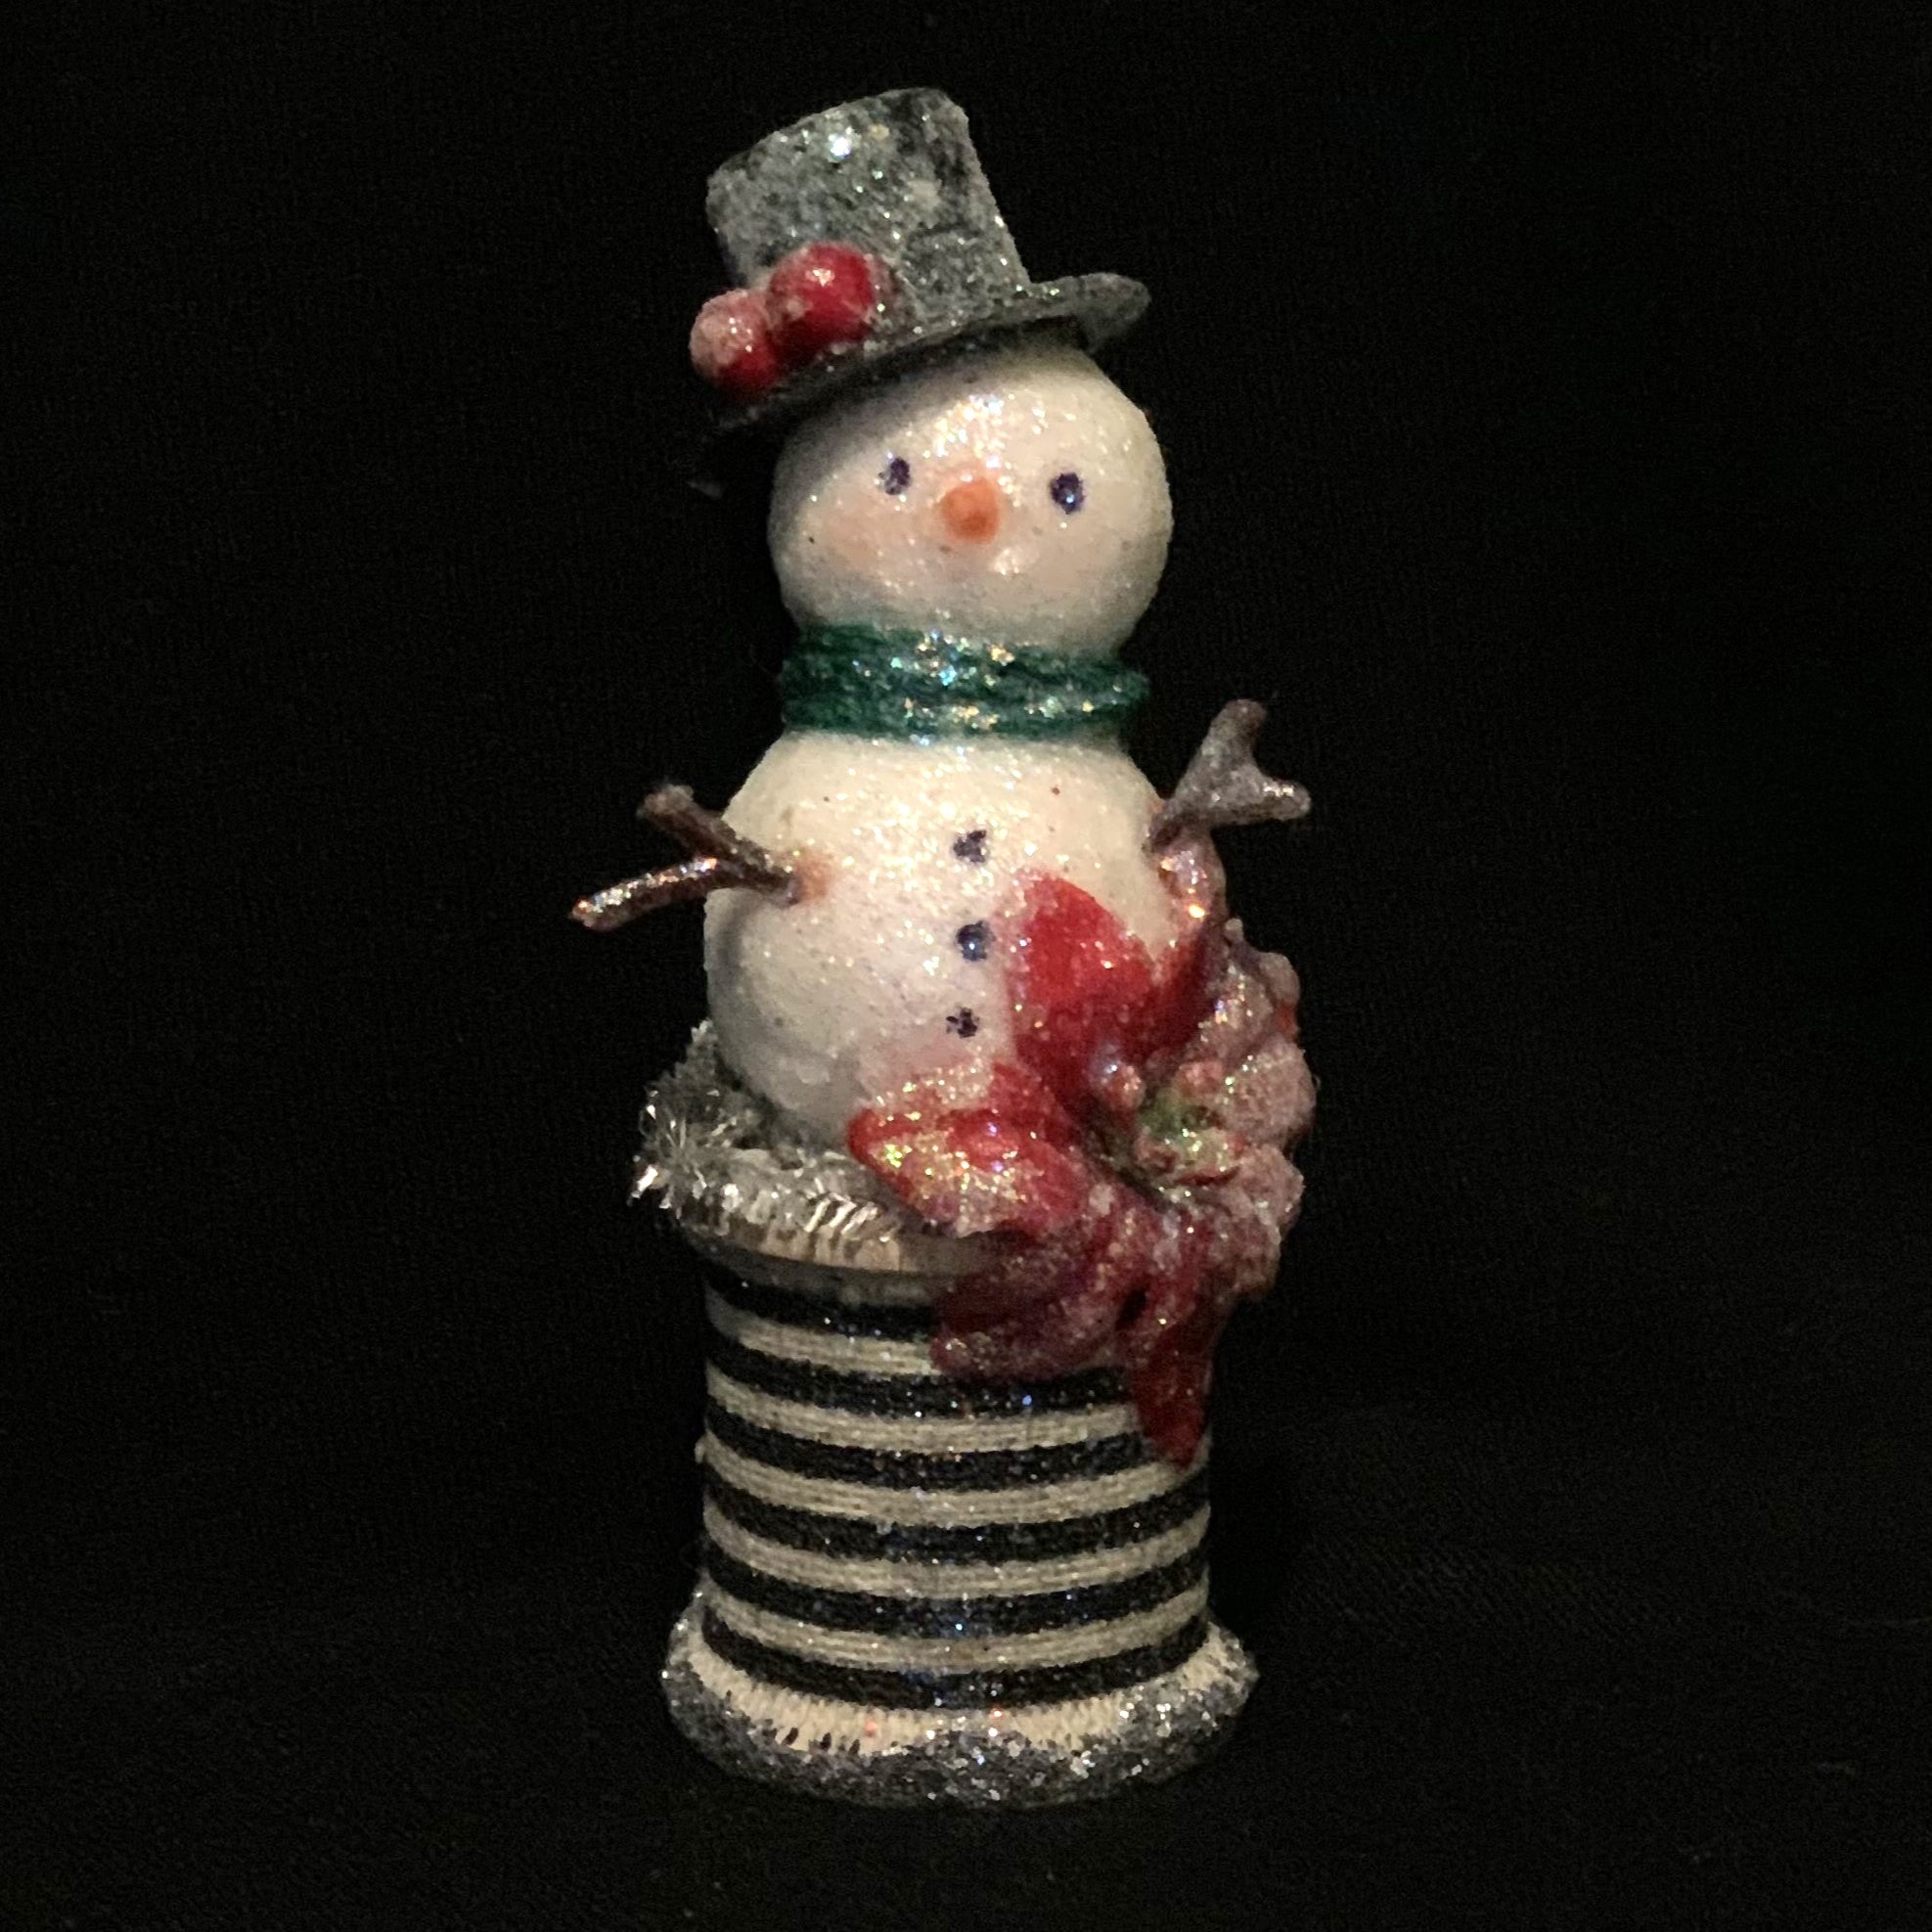 Hand-Made Ornament Snowman wth Balloons